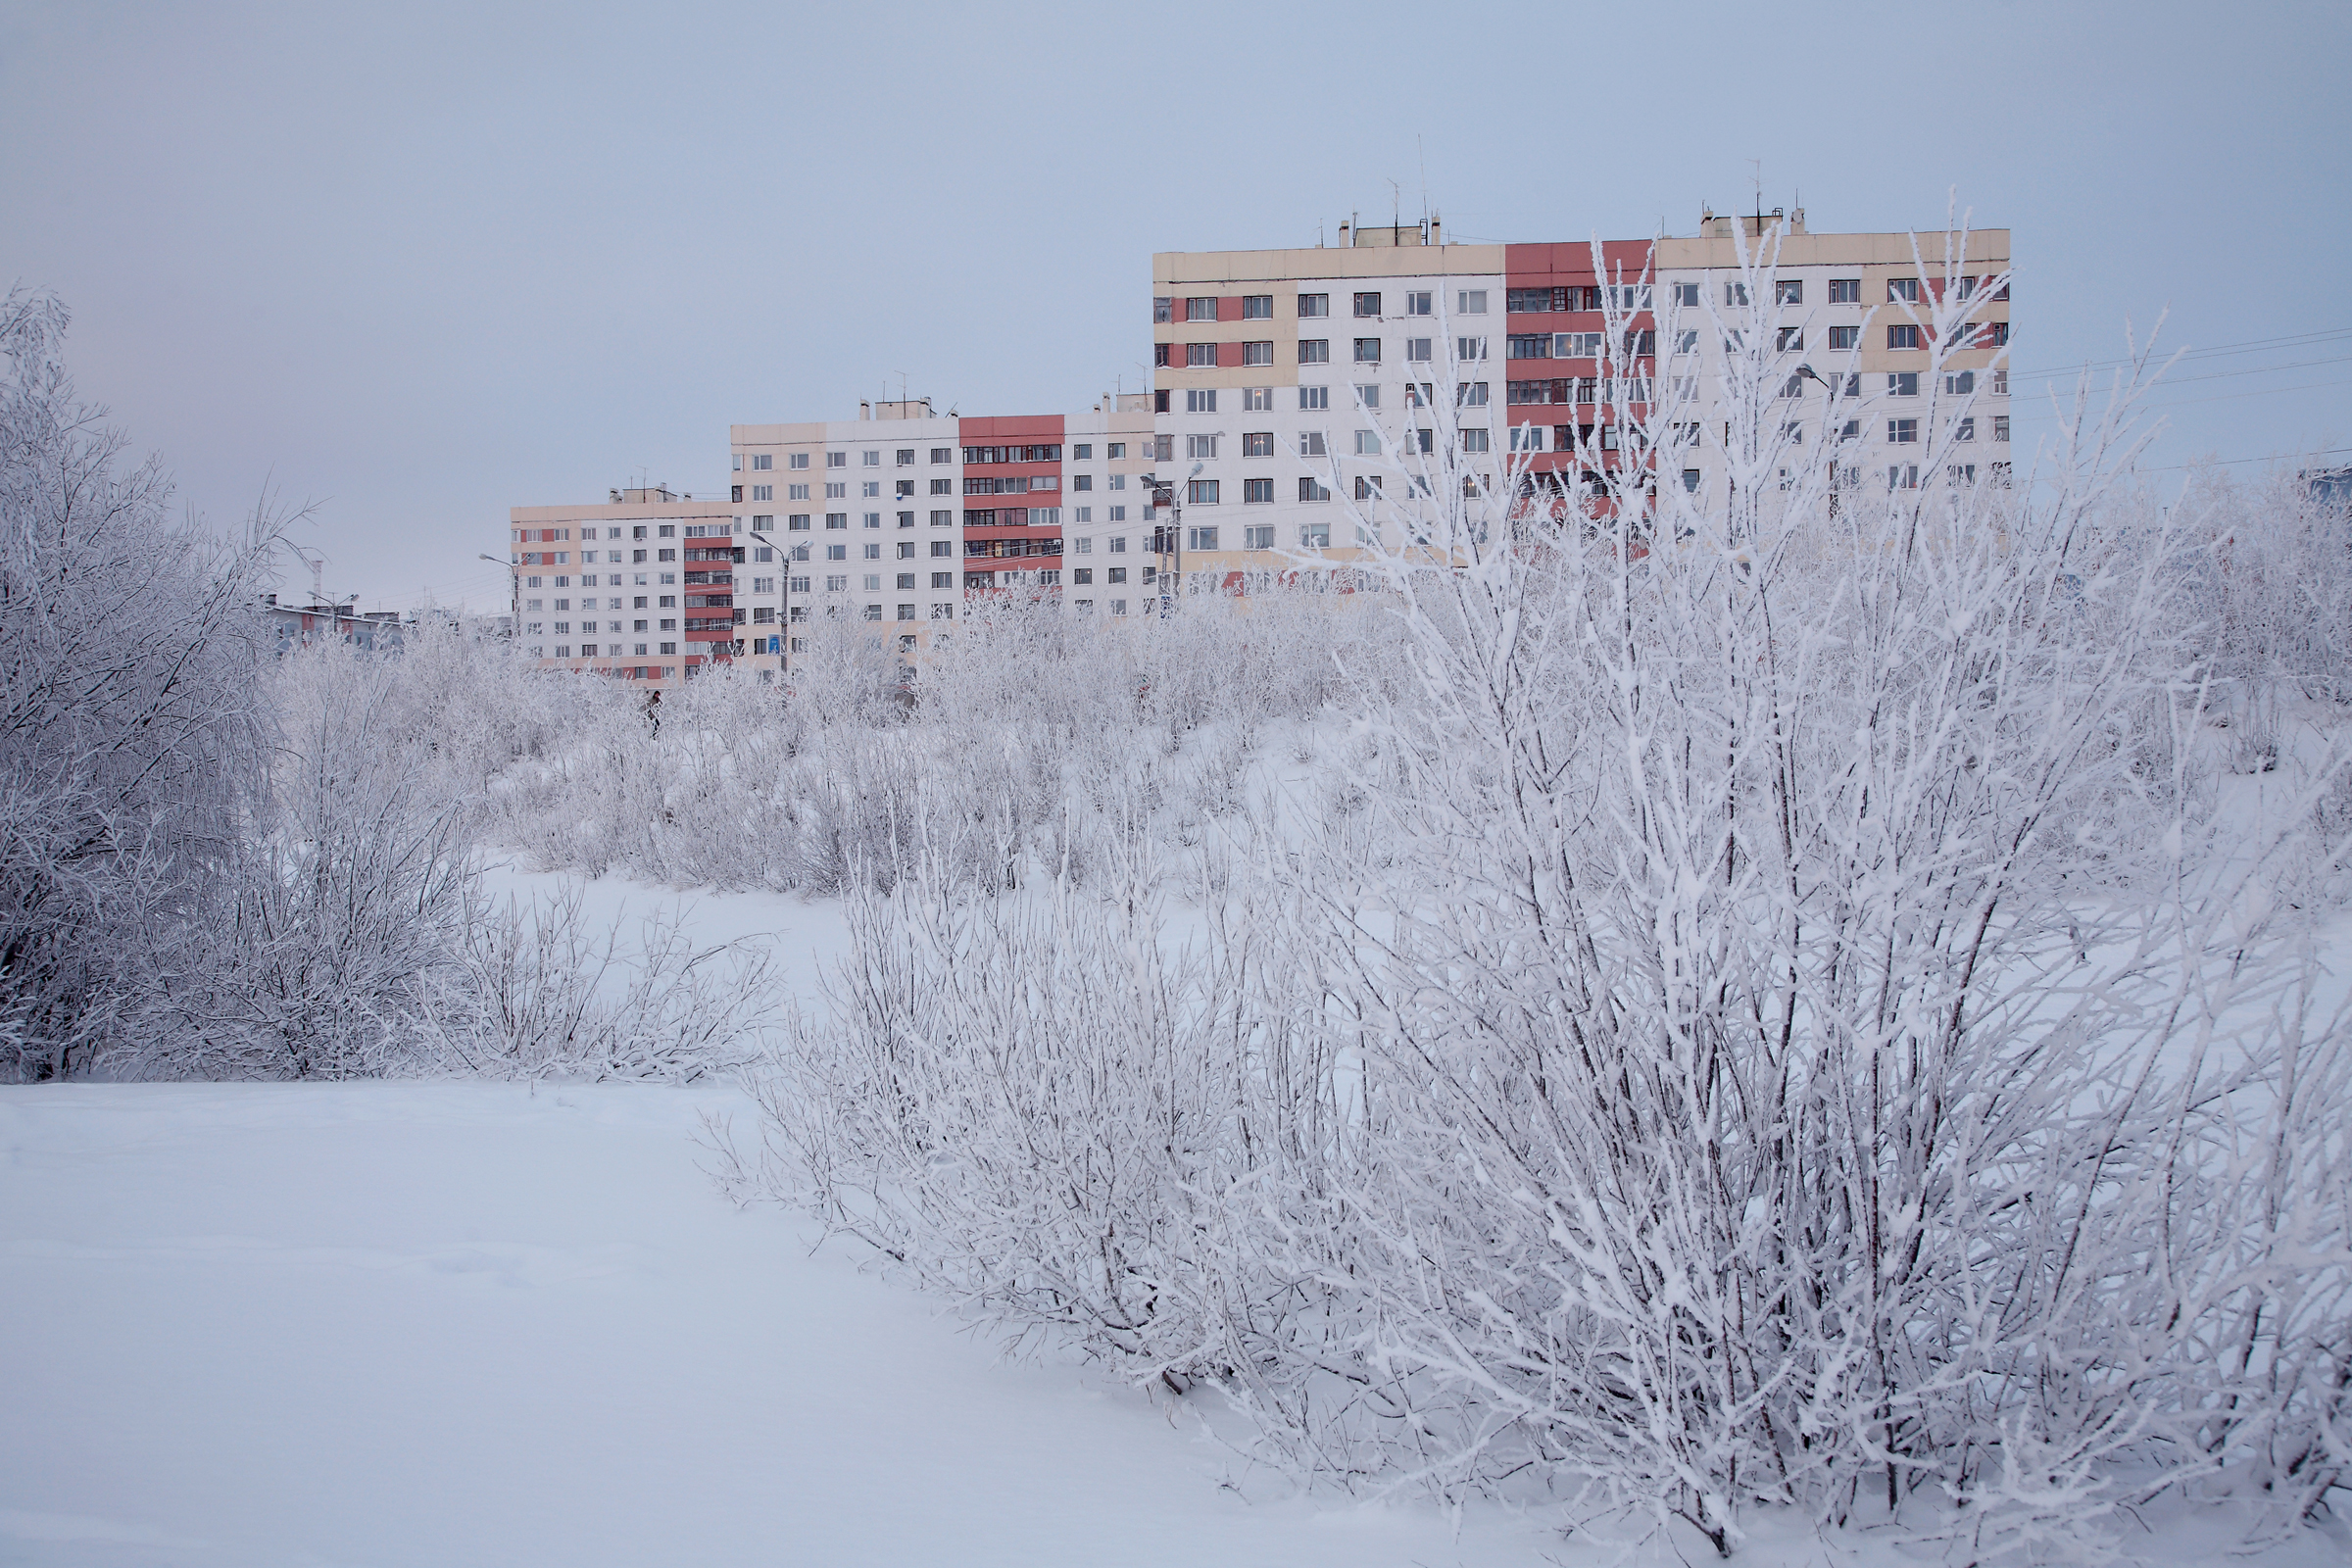 Арктика сегодня. В Норильске построят Ледовый дворец спорта за 6 млрд рублей